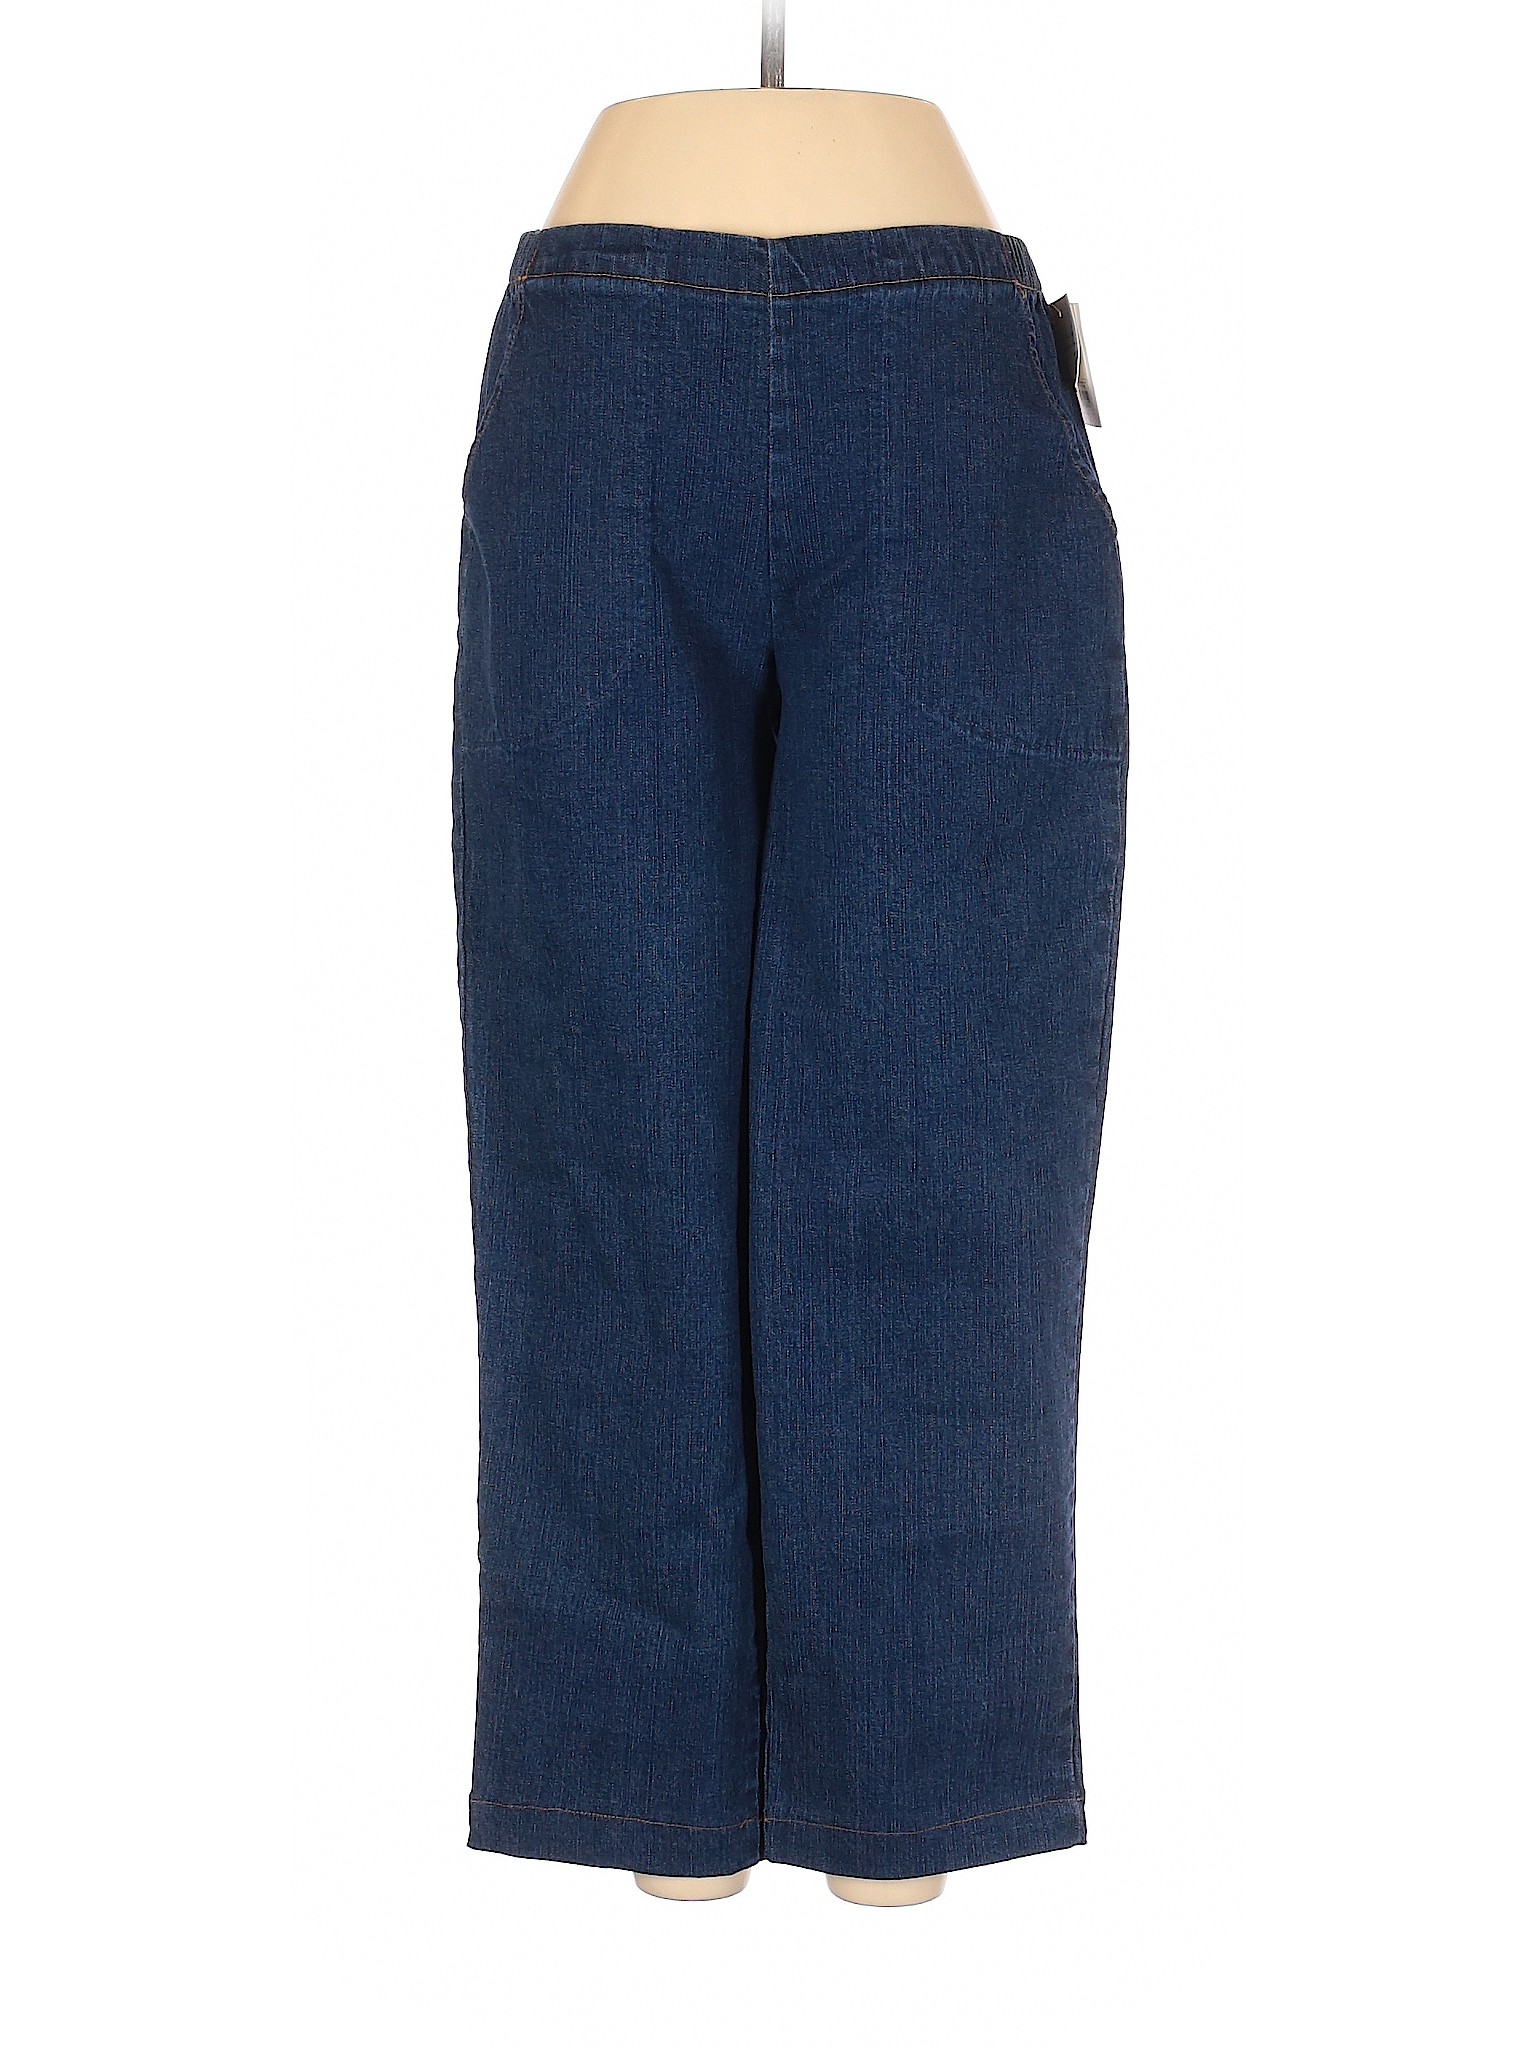 NWT Croft & Barrow Women Blue Jeans 8 Petites | eBay